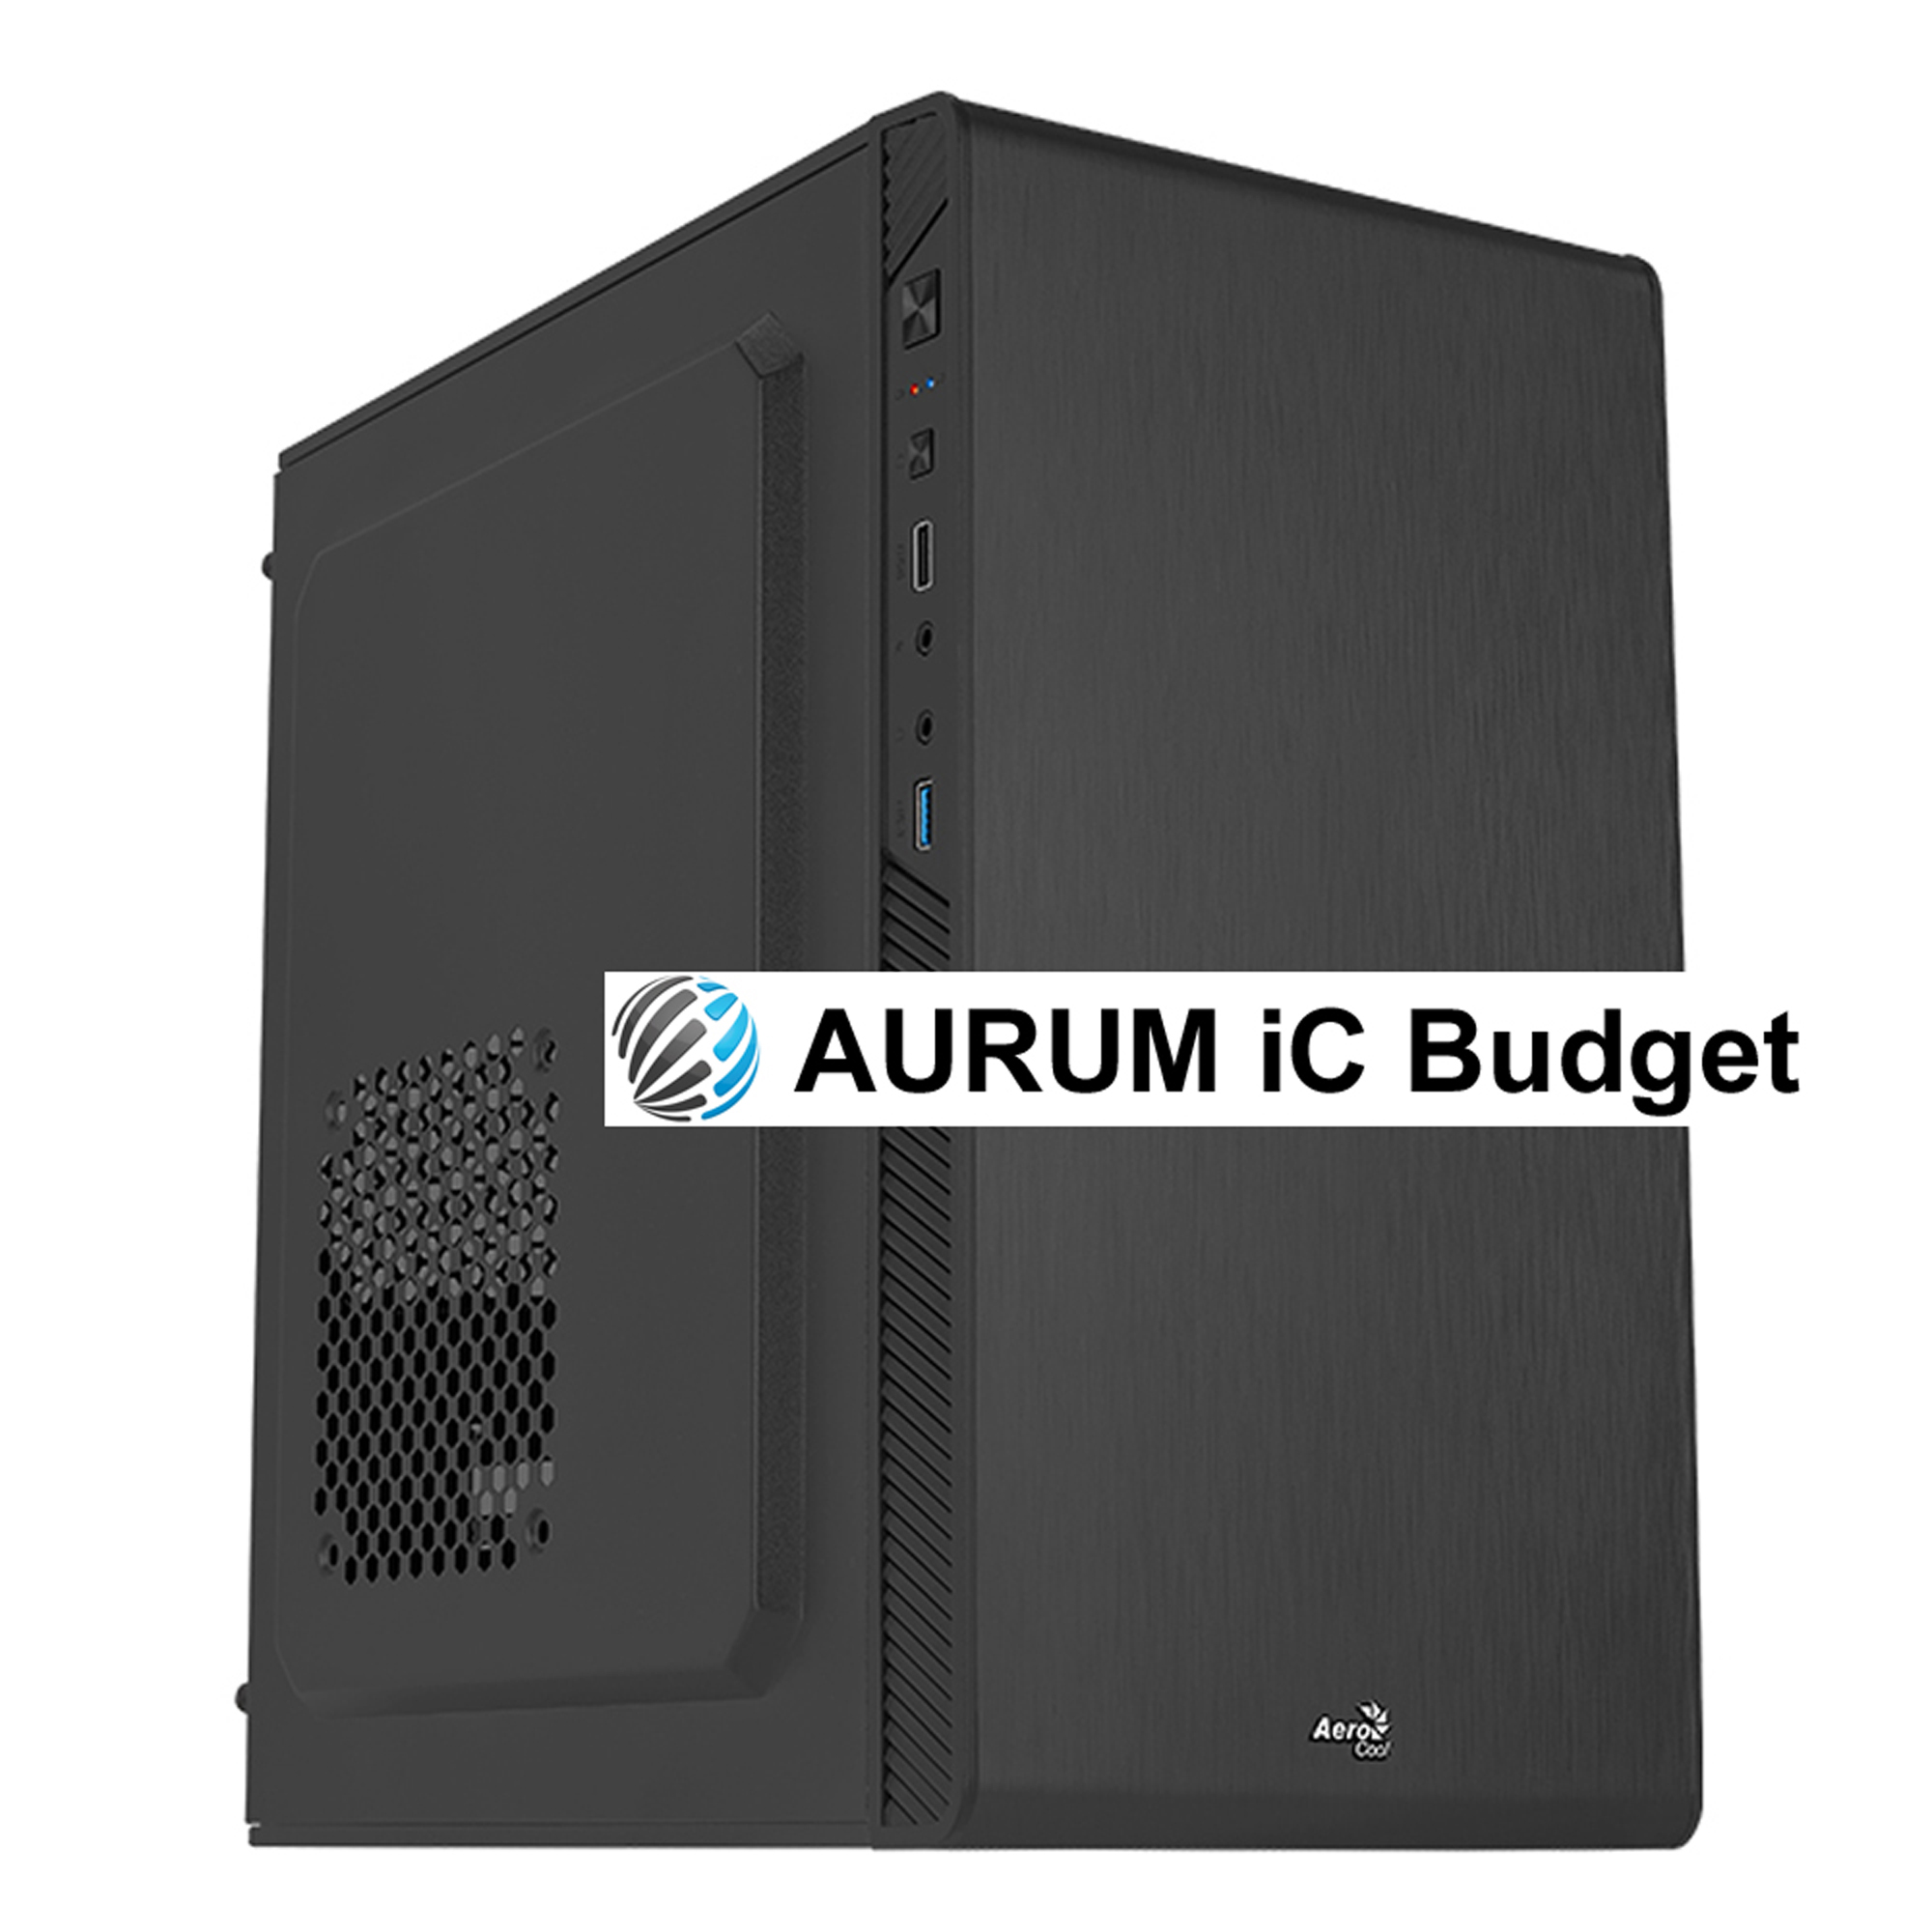 Ubuntu GB Linux RAM, Budget AURUM GB 240 HYPTECH SSD LibreOffice, iC mit PC-Desktop, 8 I,